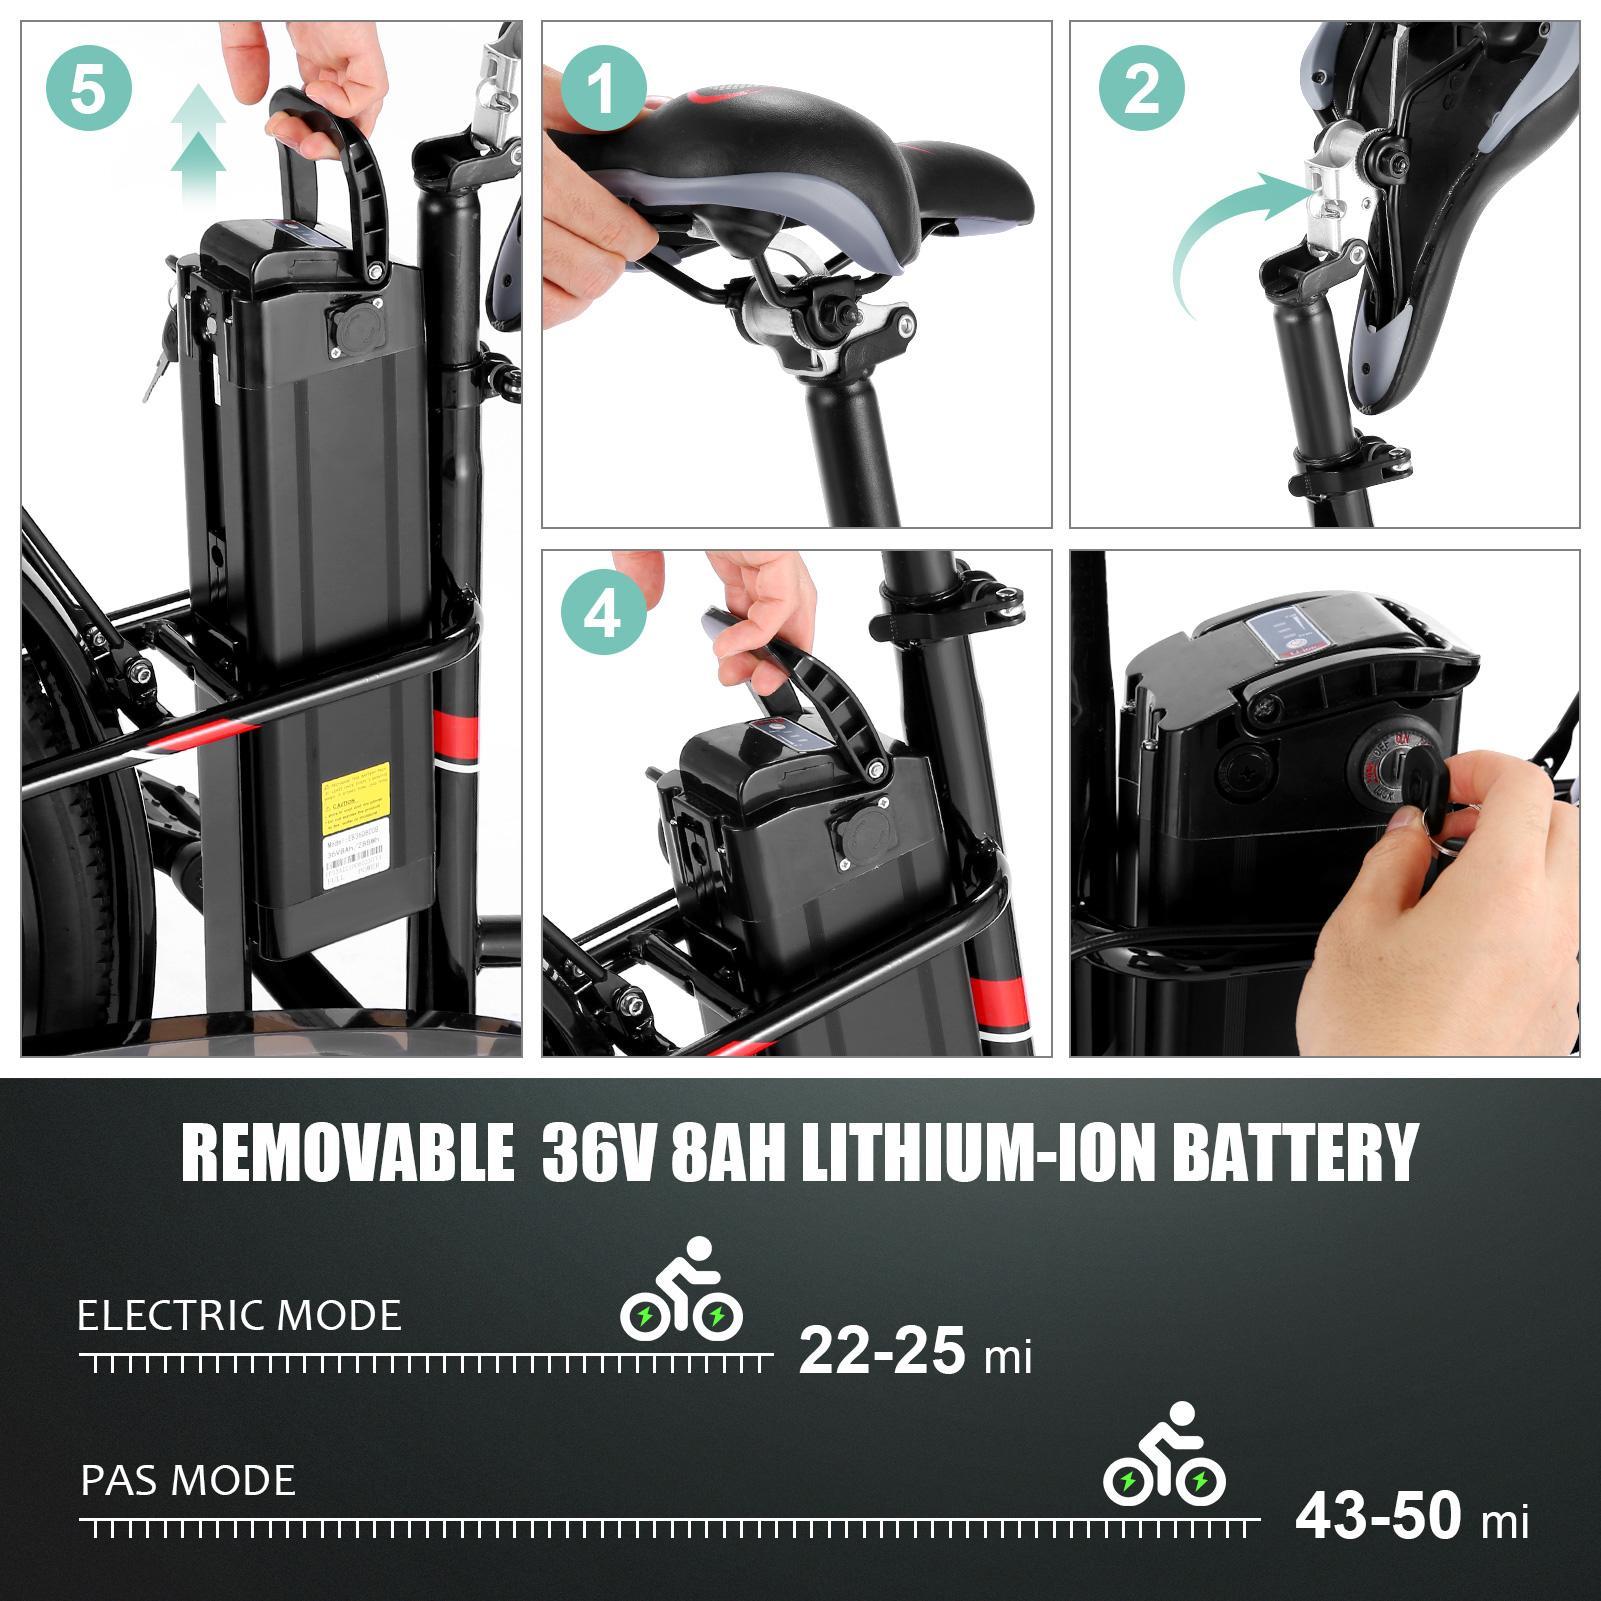 Vivi 26 inch 500W E-bike Bicycle Adult Electric Commuter city Bike Disc Brake Lithium Battery 7 Speed Gear